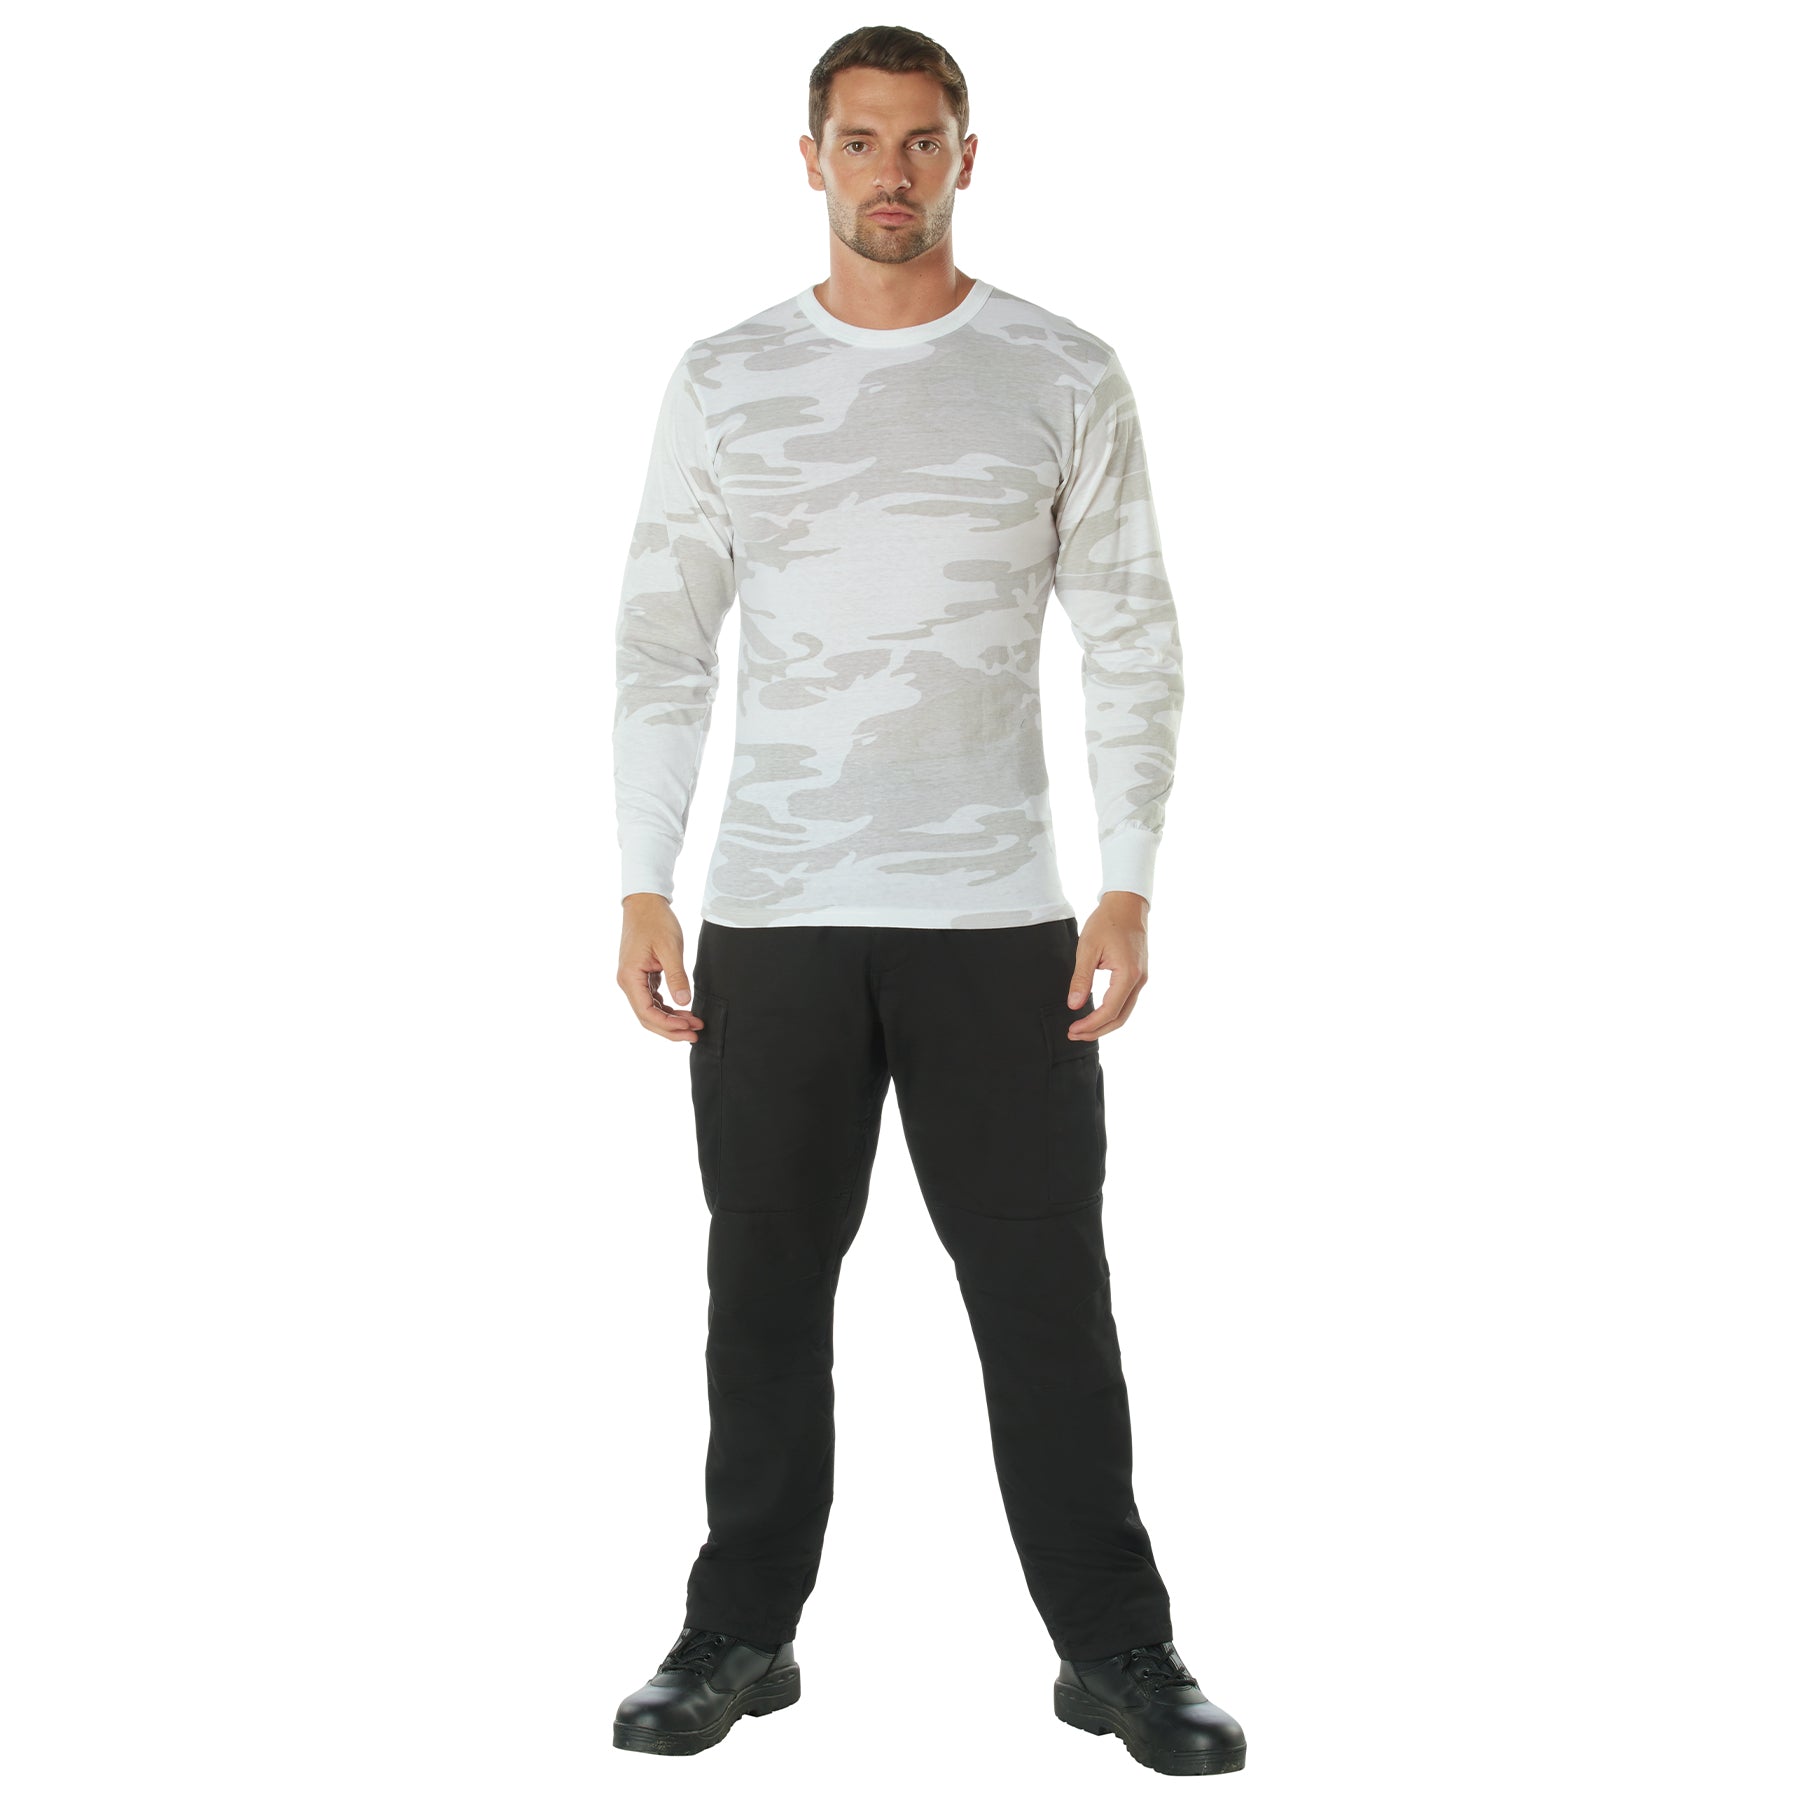 Rothco Long Sleeve Color Camo T-Shirt - Tactical Choice Plus